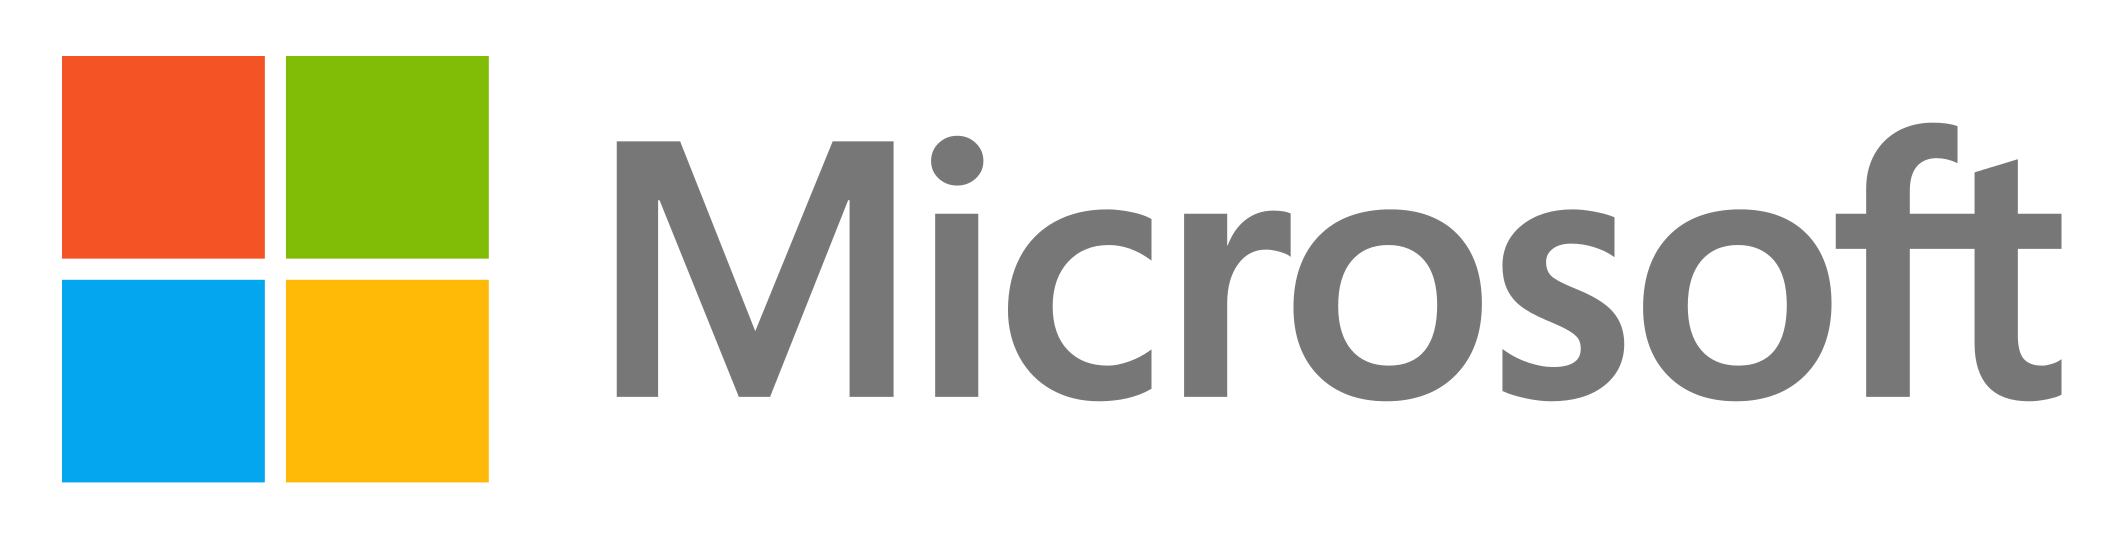 microsoft-logo-6